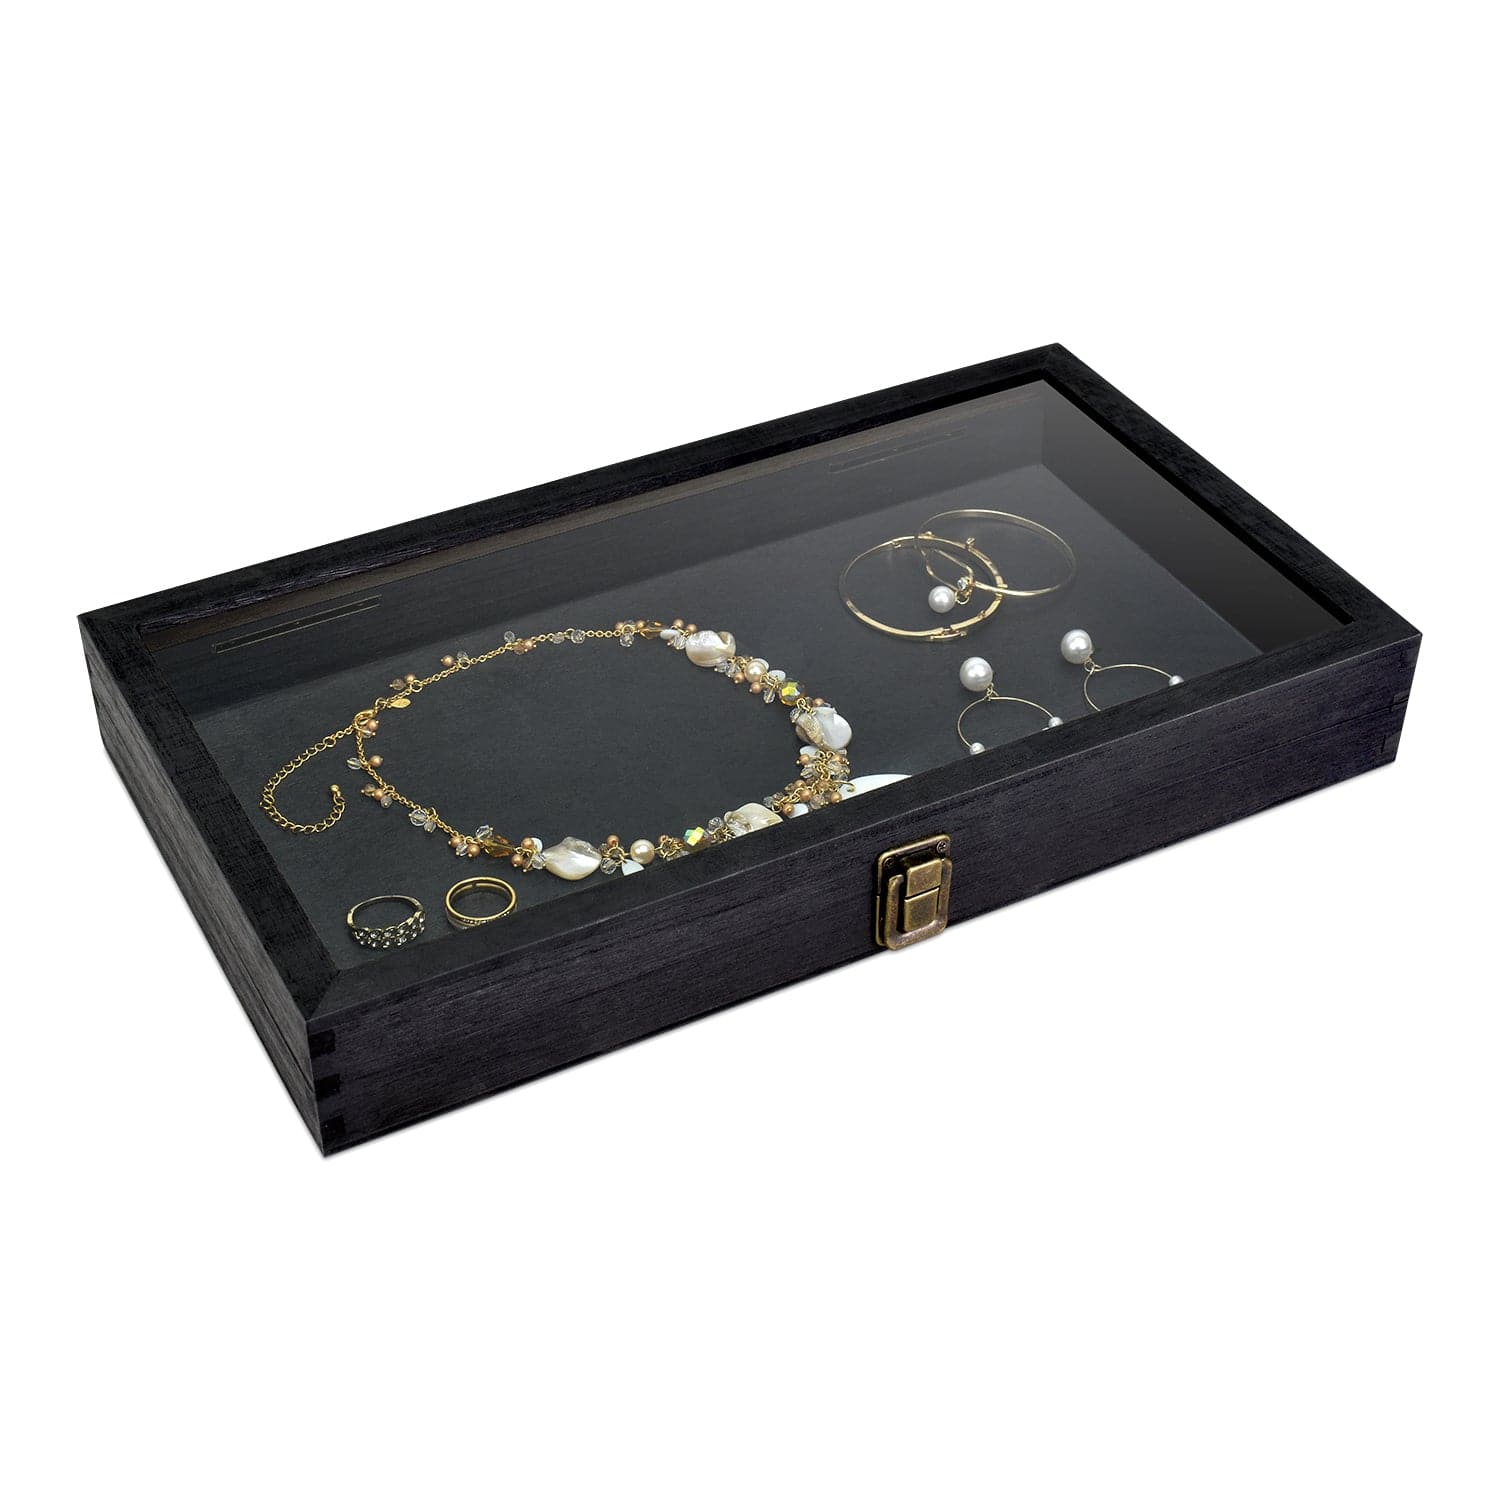 New in Jewelry Organizer Box Antique Imitation Copper Latch